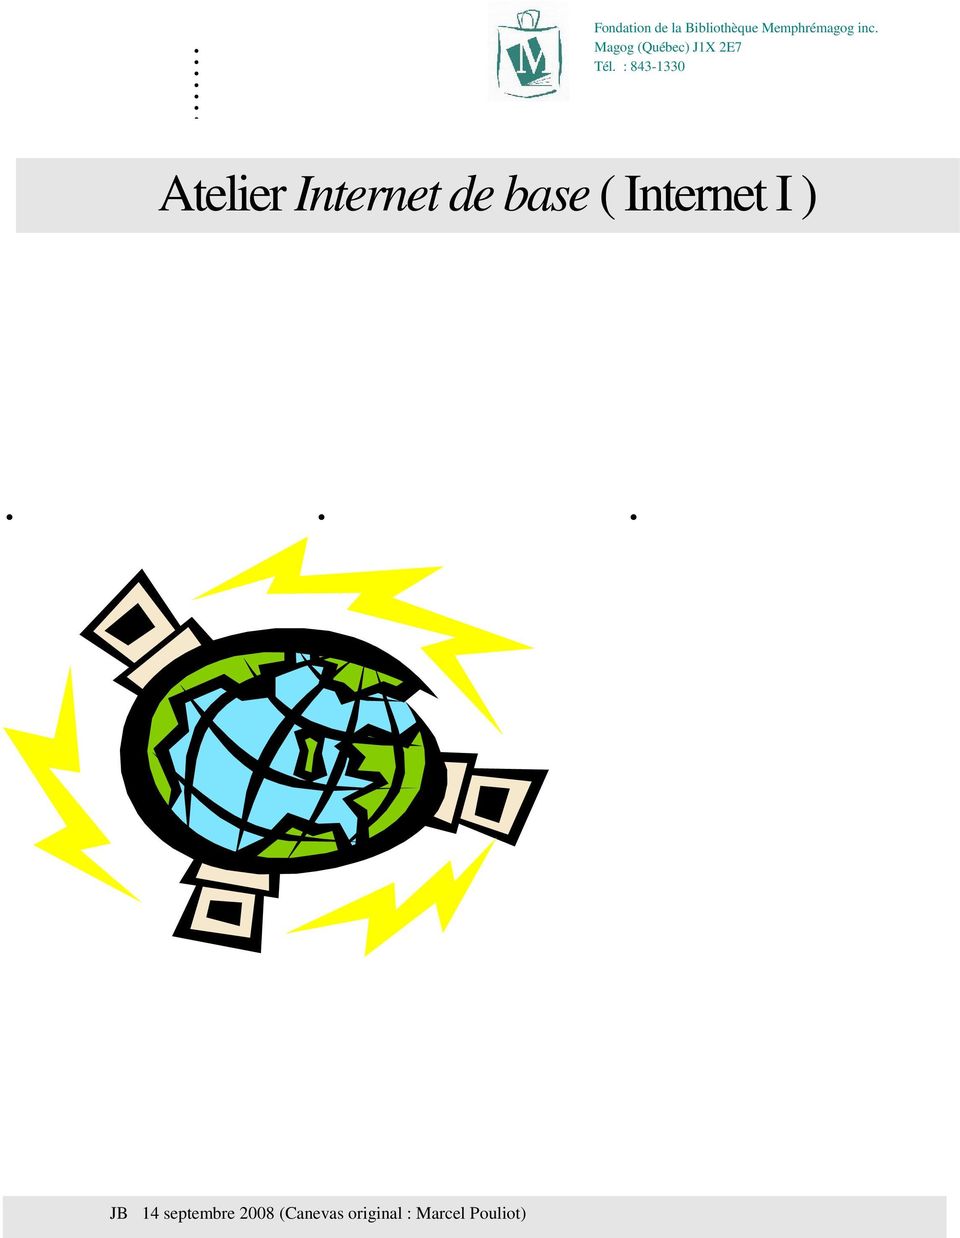 Atelier Internet de base ( Internet I ).